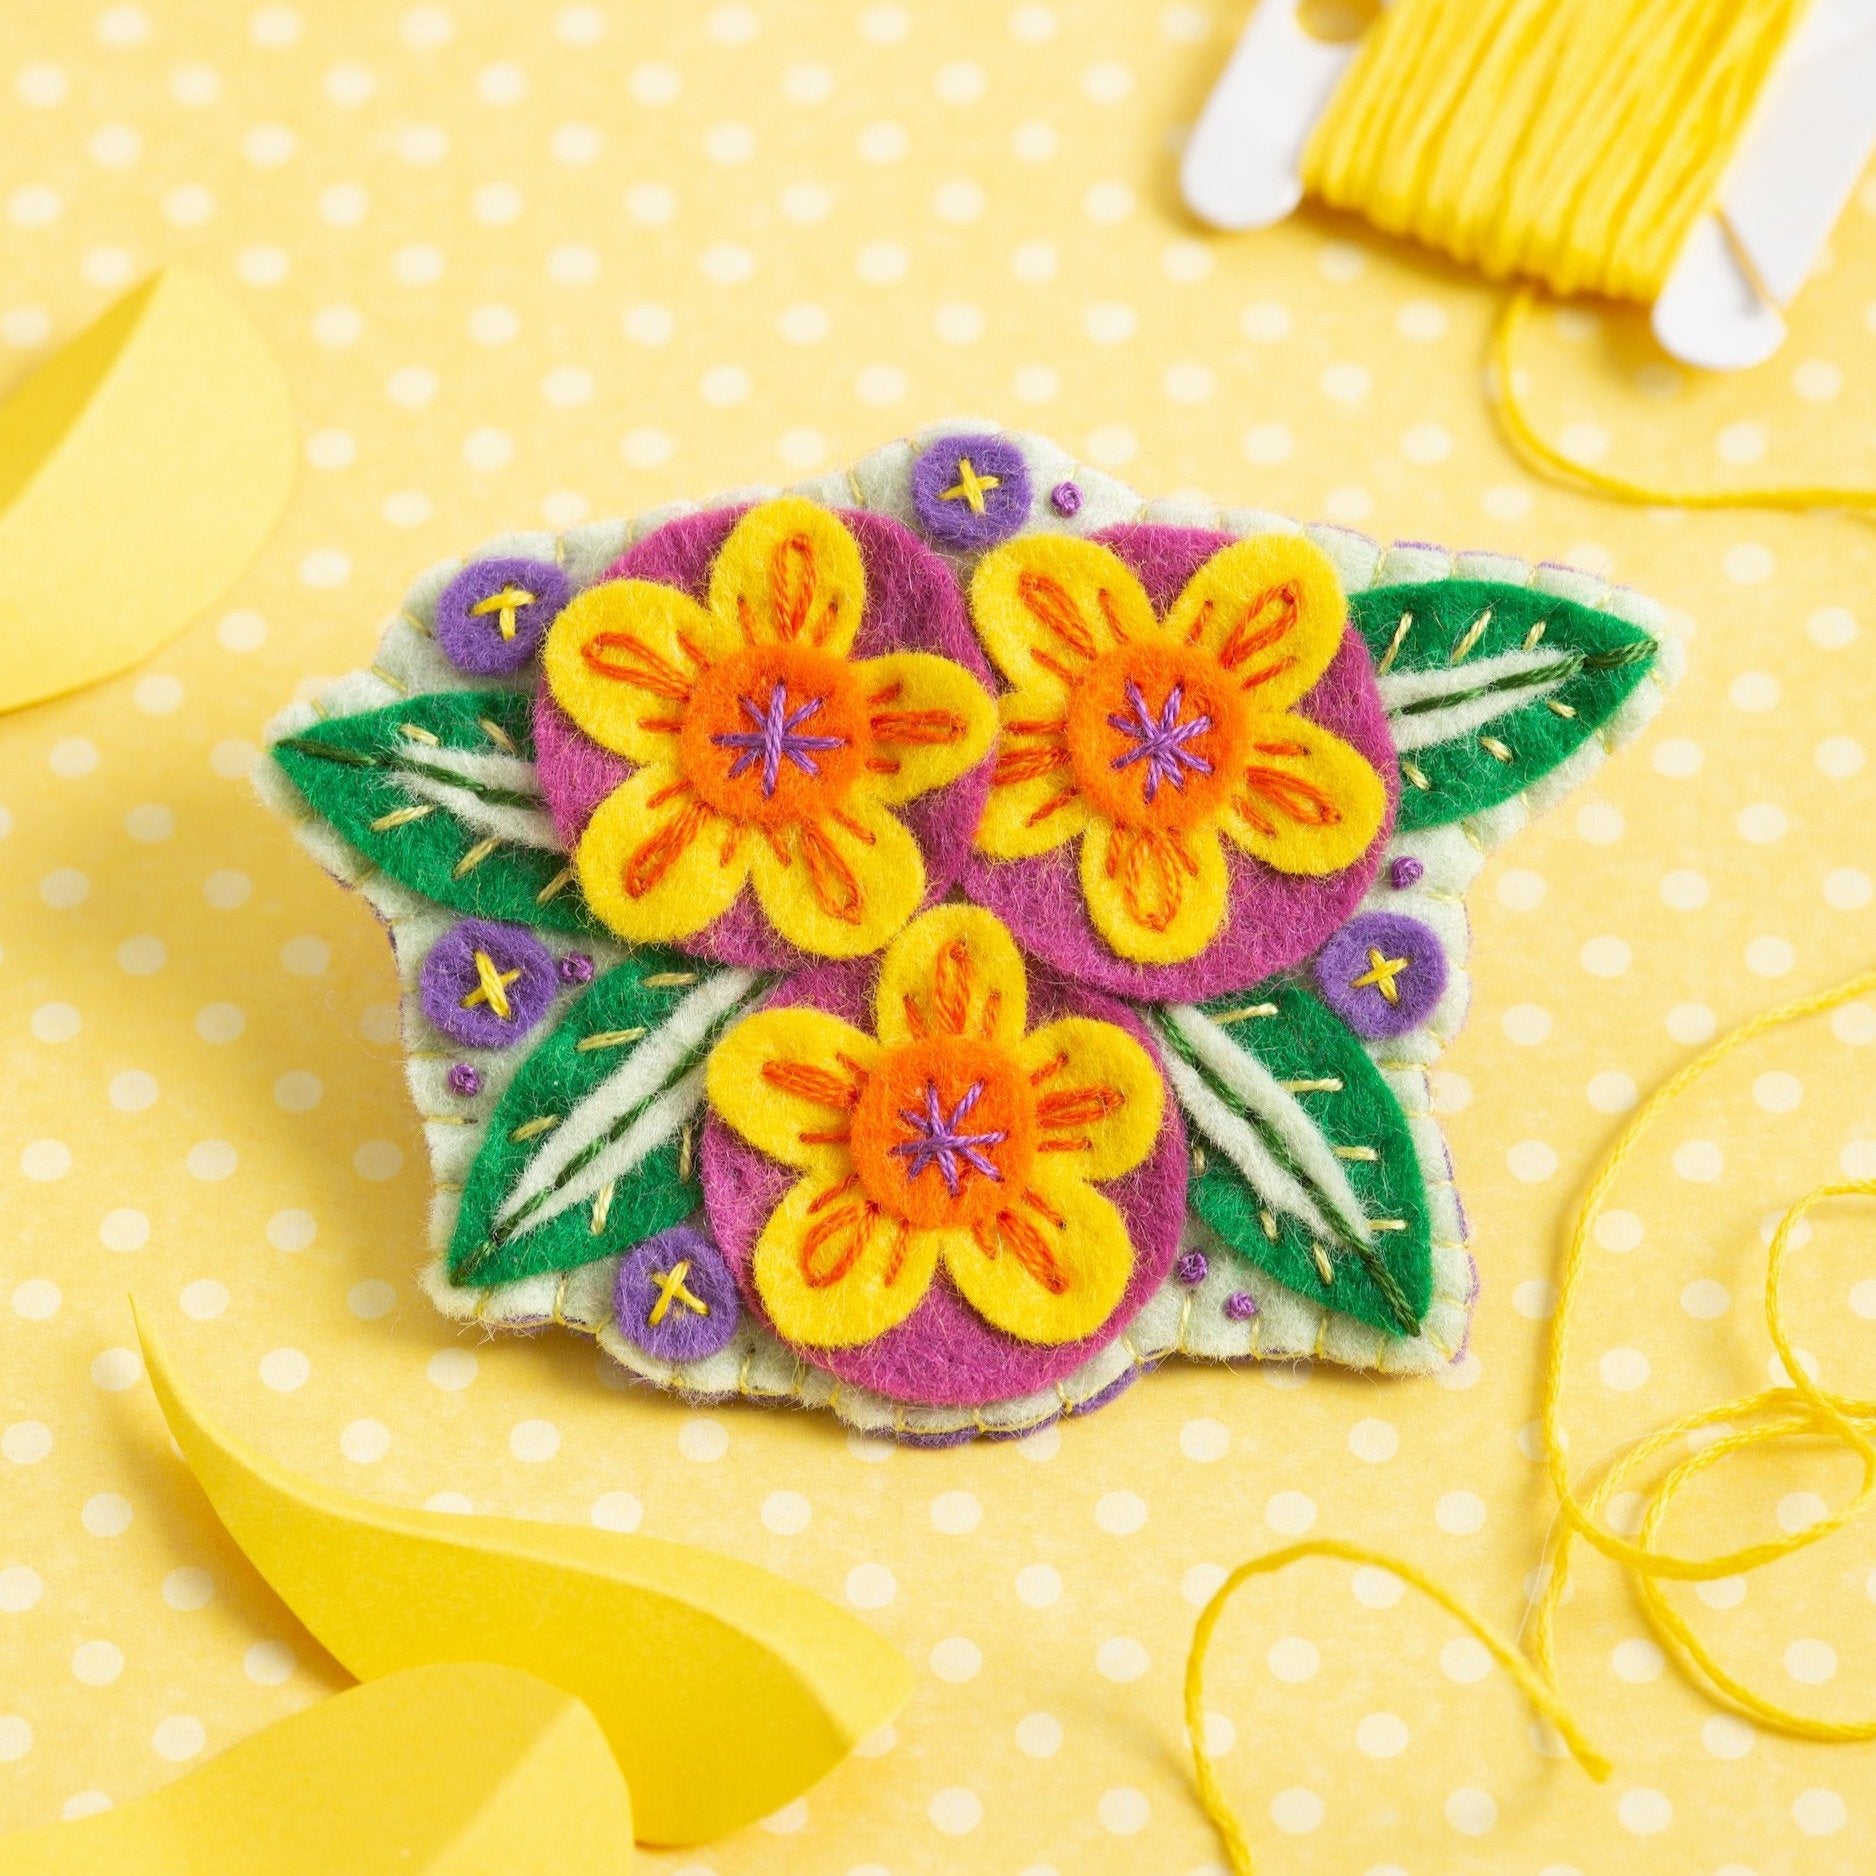 Penelope flower brooch felt craft kit on yellow polka dot background.